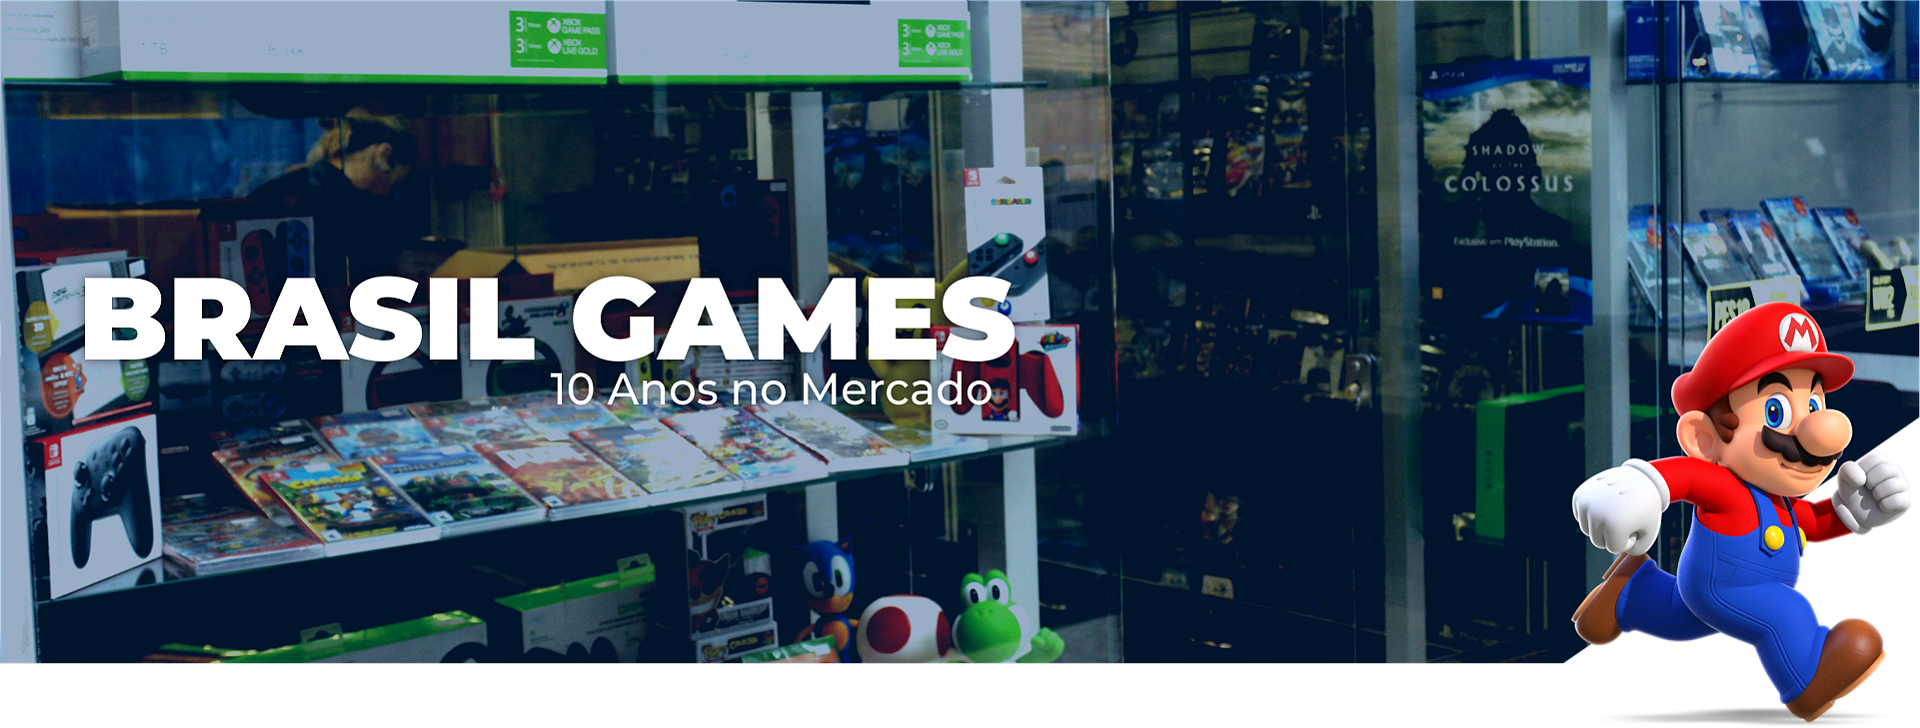 Chega ao mercado a nova plataforma Oddsgate focada no Brasil - ﻿Games  Magazine Brasil